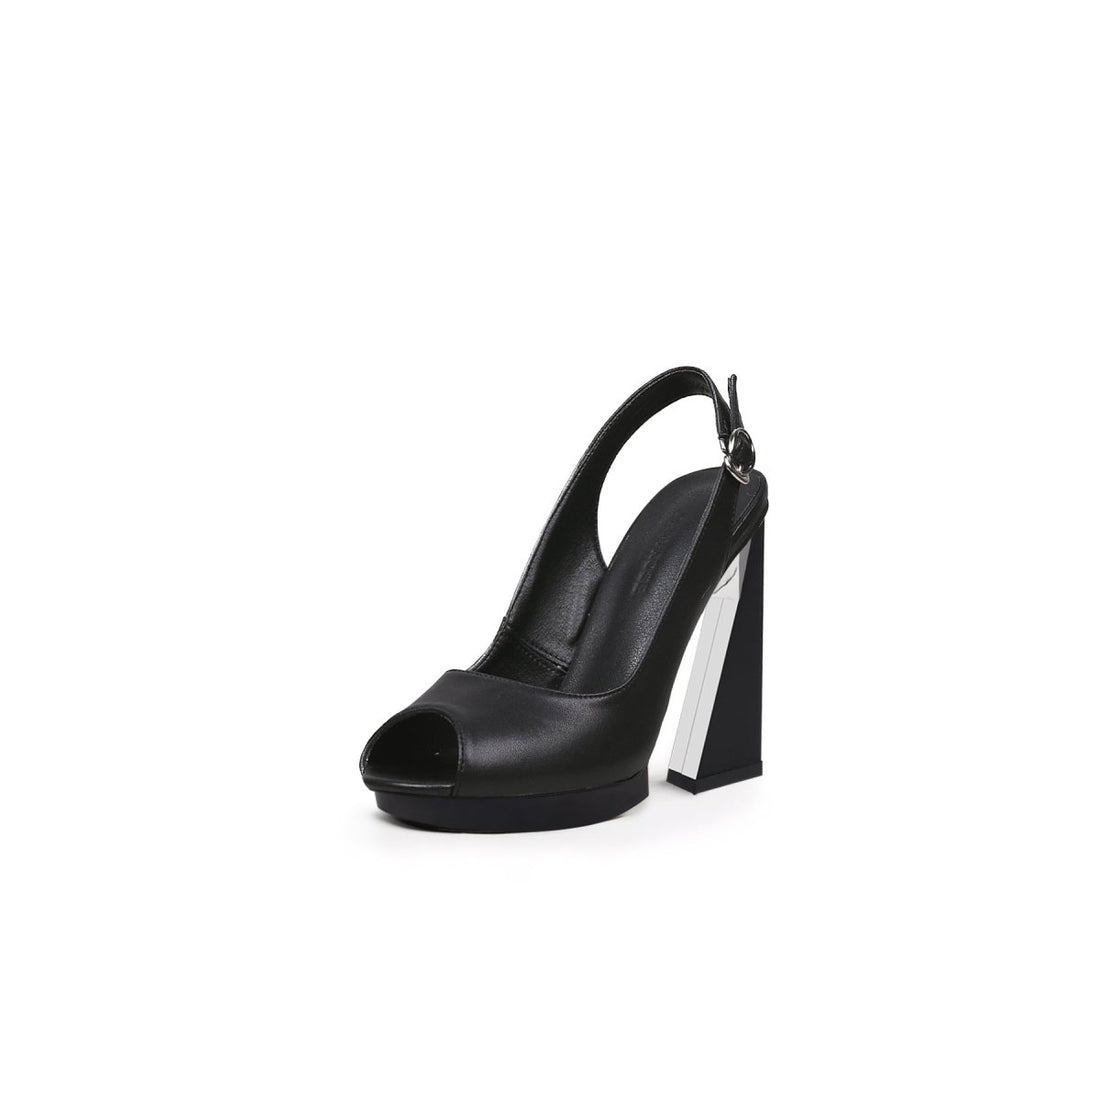 Stylish Open Toe Triangular Heel Black Sandals - 0cm